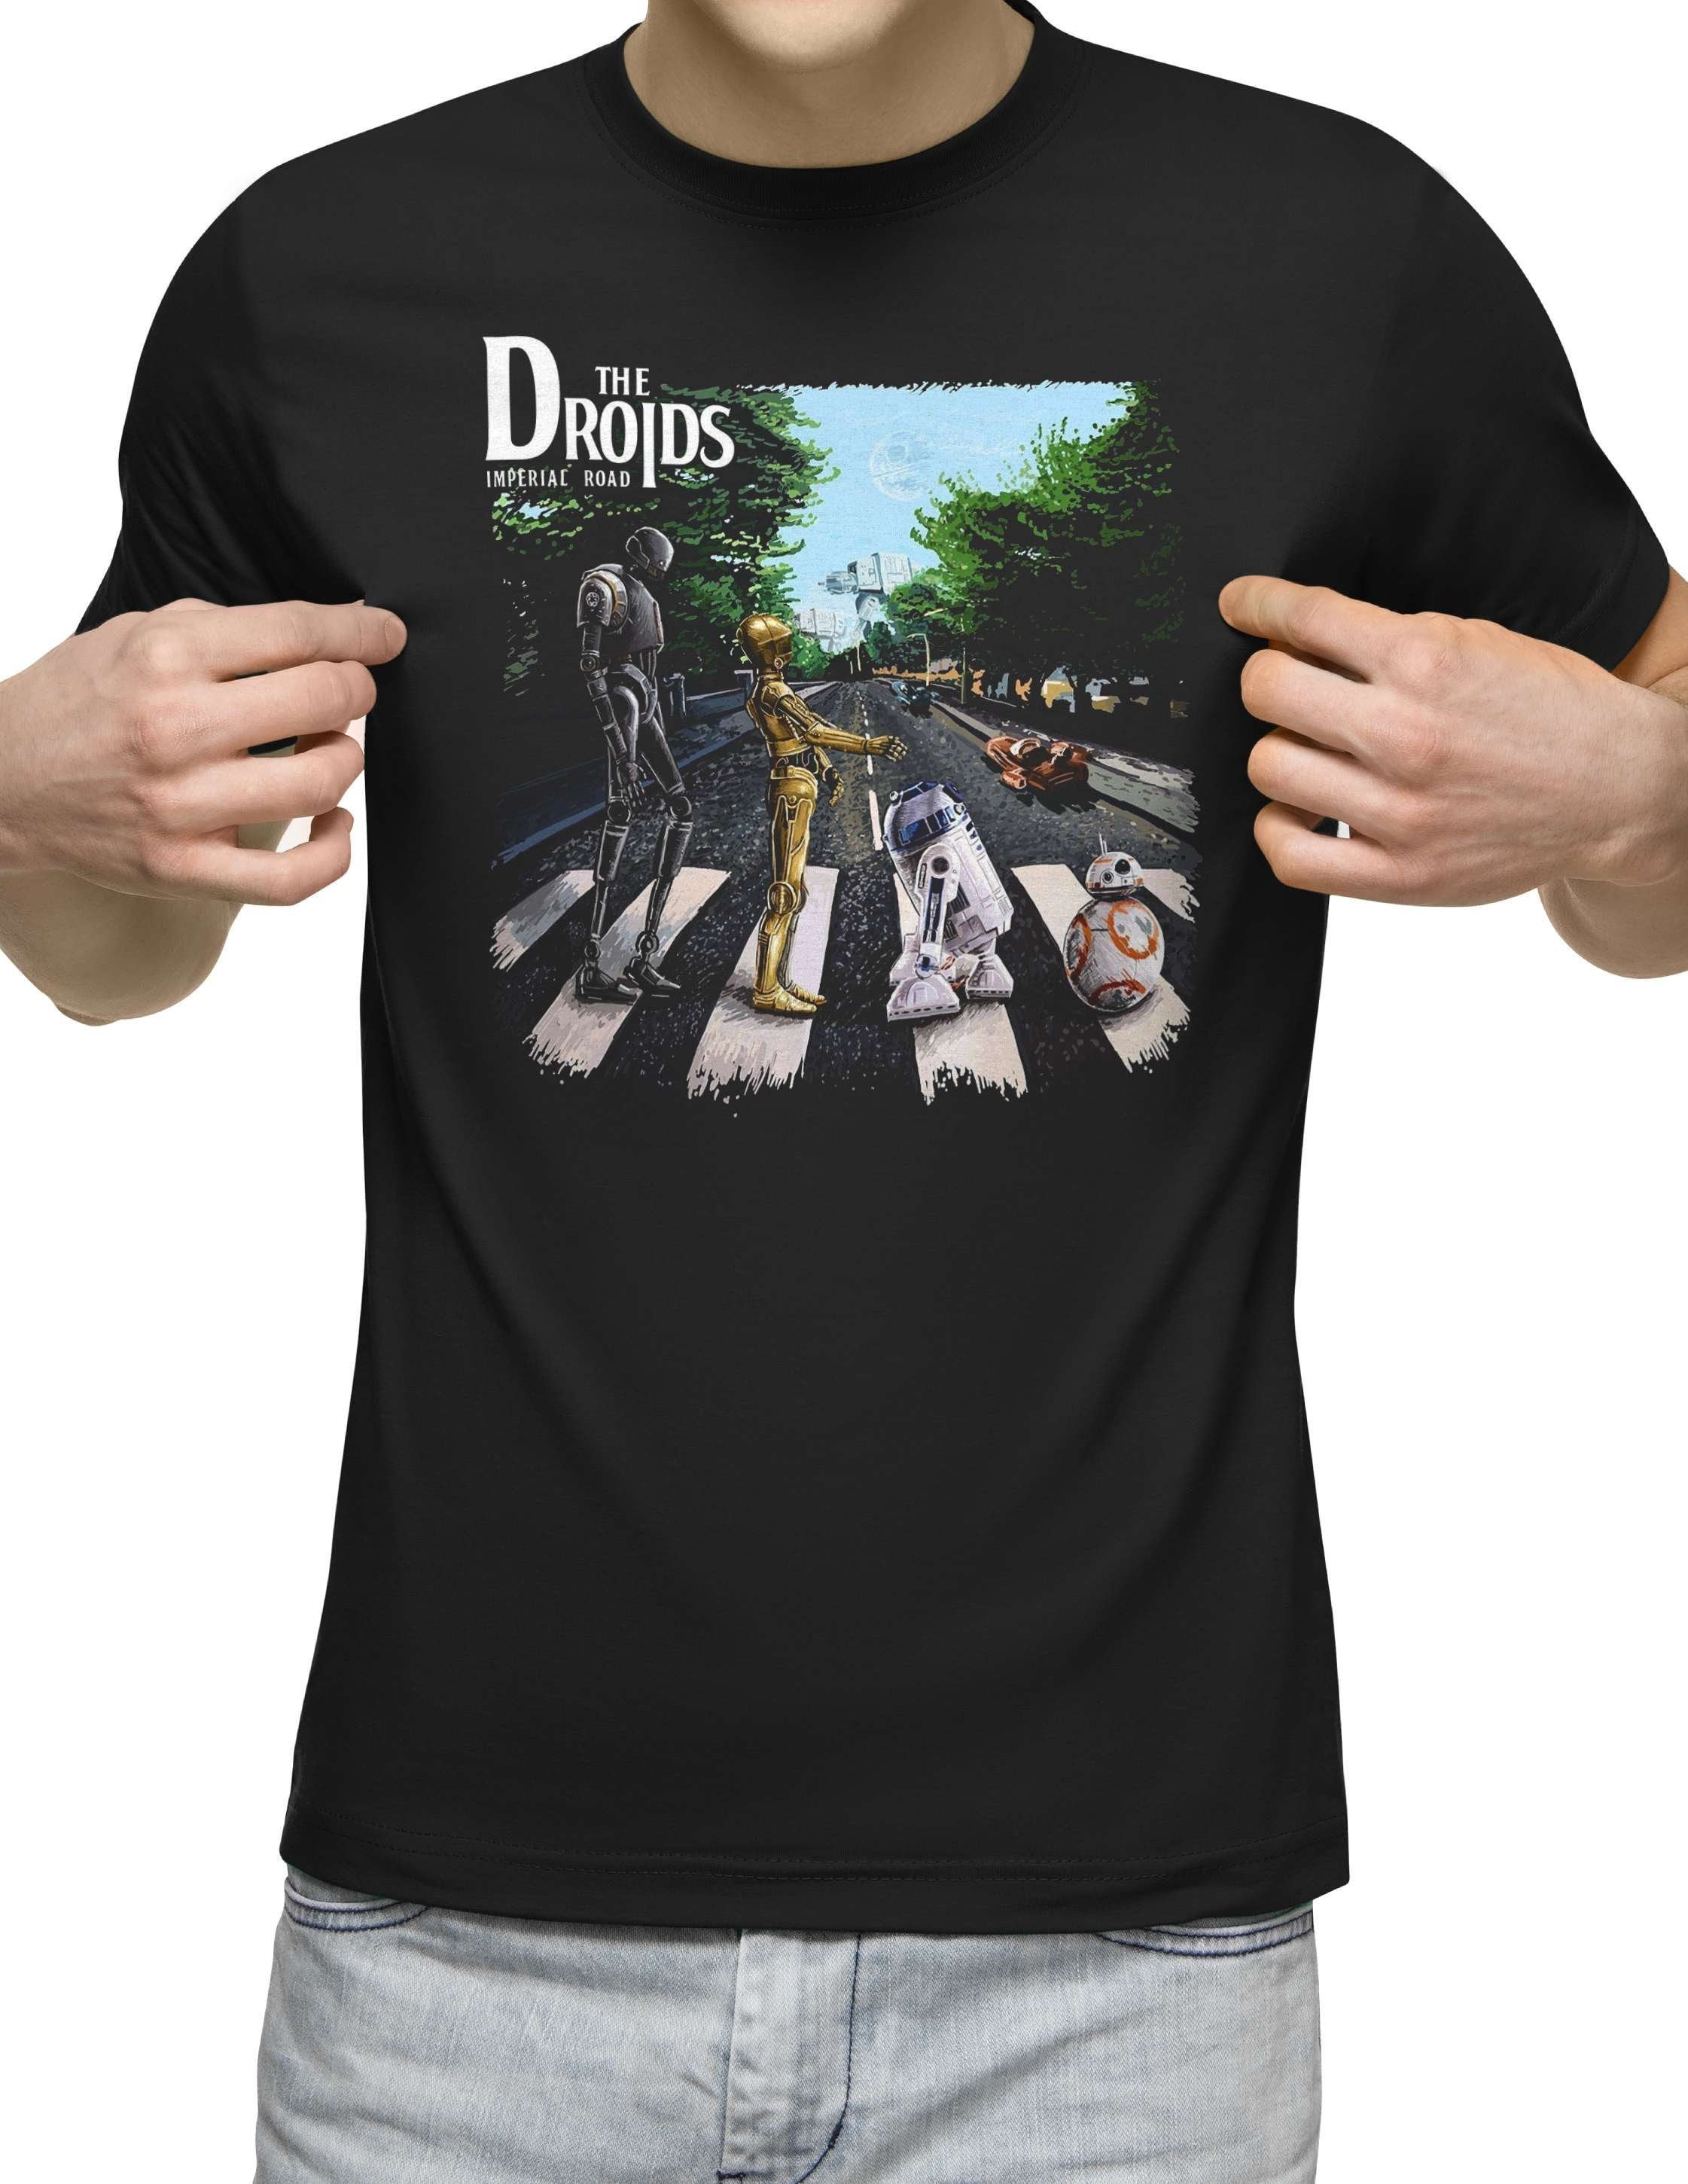 Star Wars Shirt Droids Abbey Road T-shirt Movie Music Mashup 